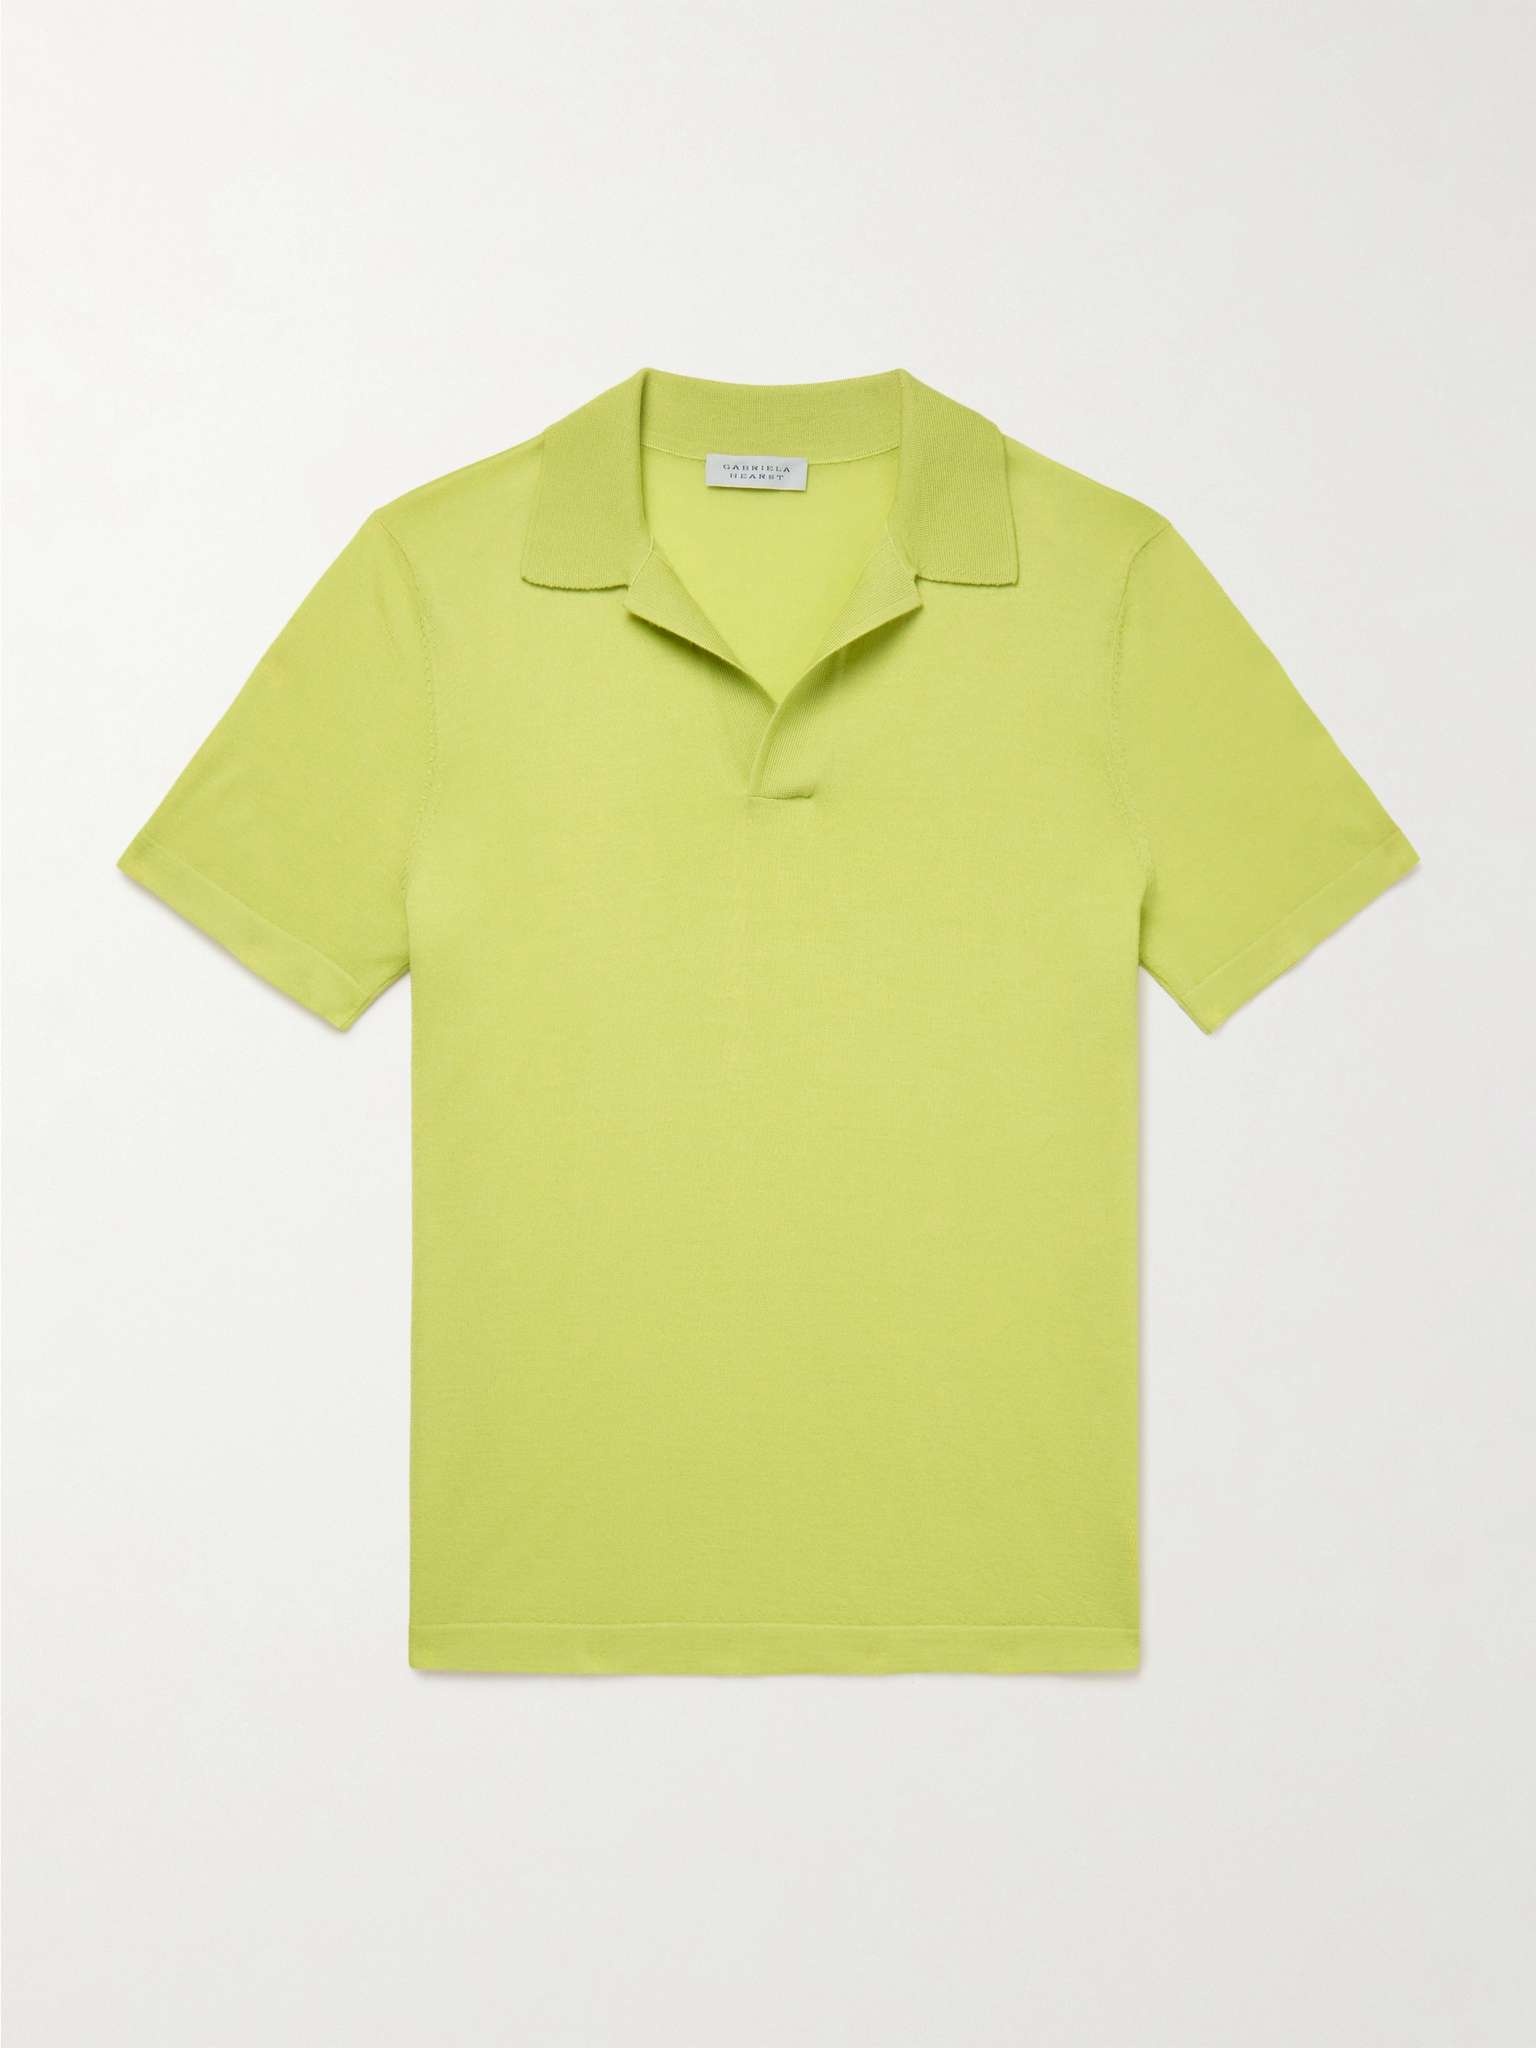 Stendhal Cashmere Polo Shirt - 1